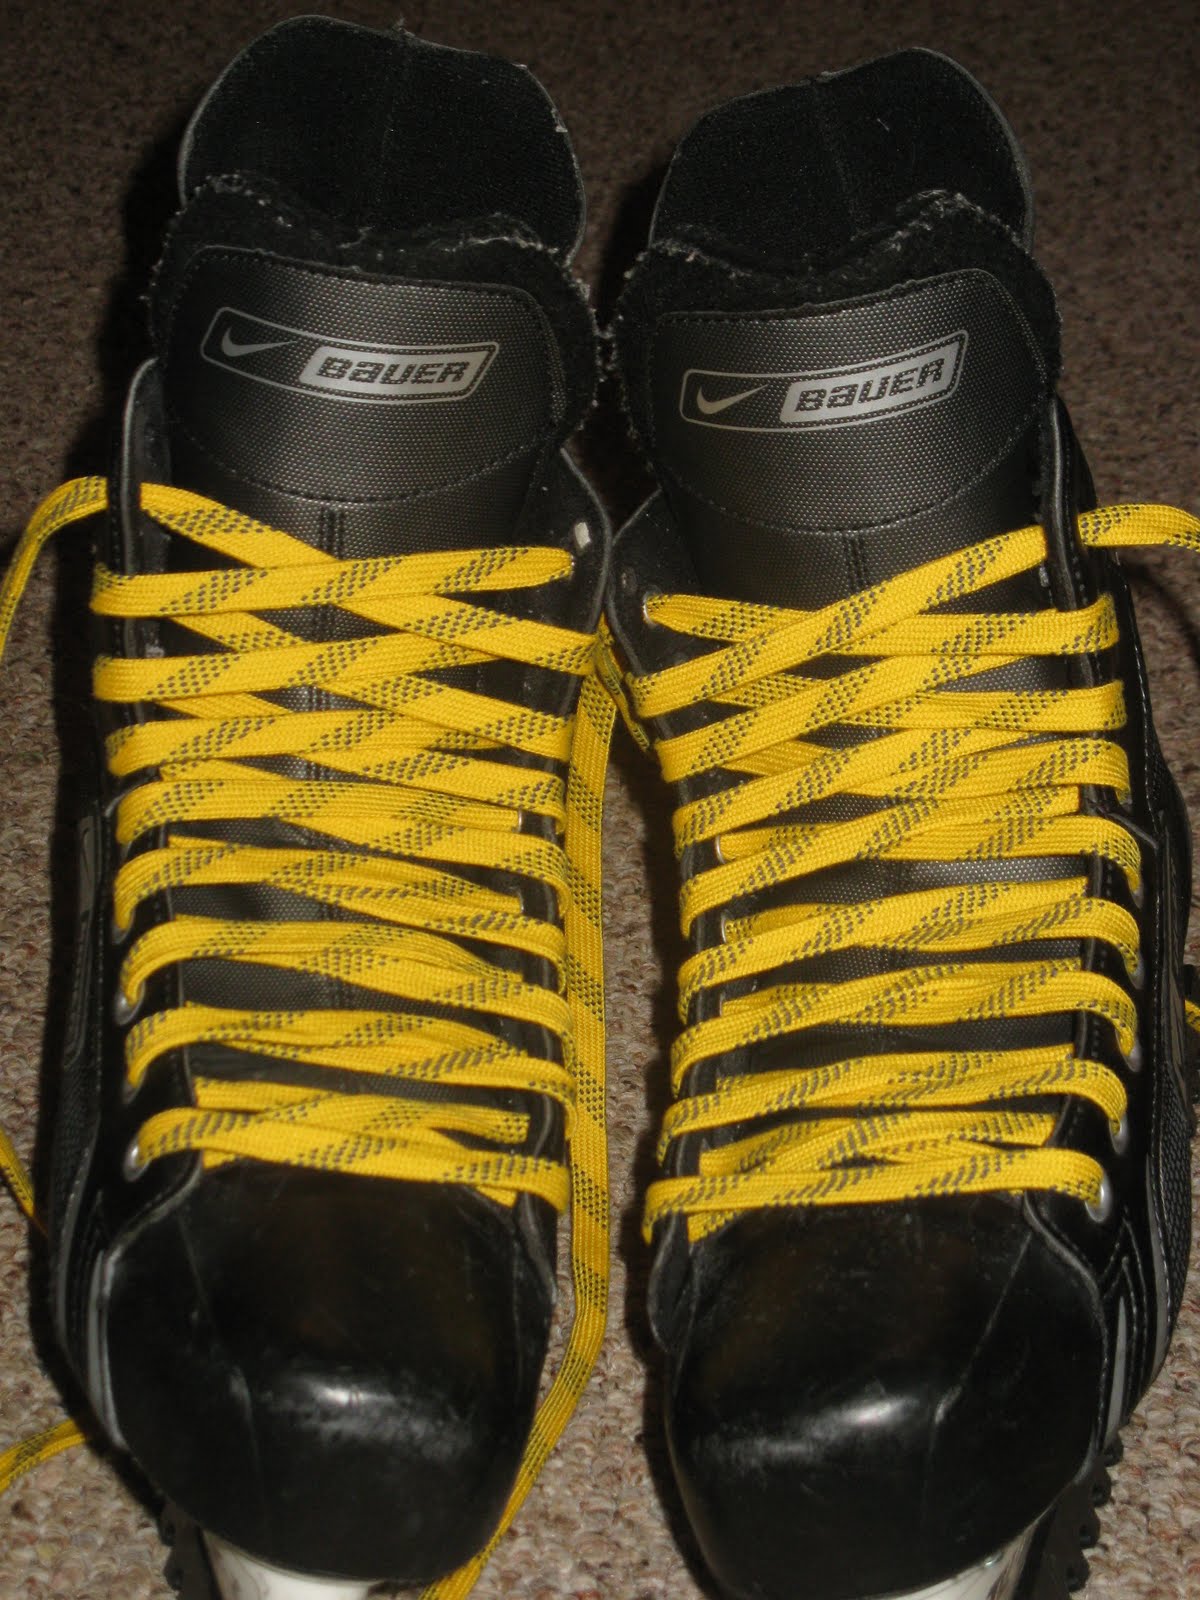 Jake Franczek: New Hockey Skate Laces